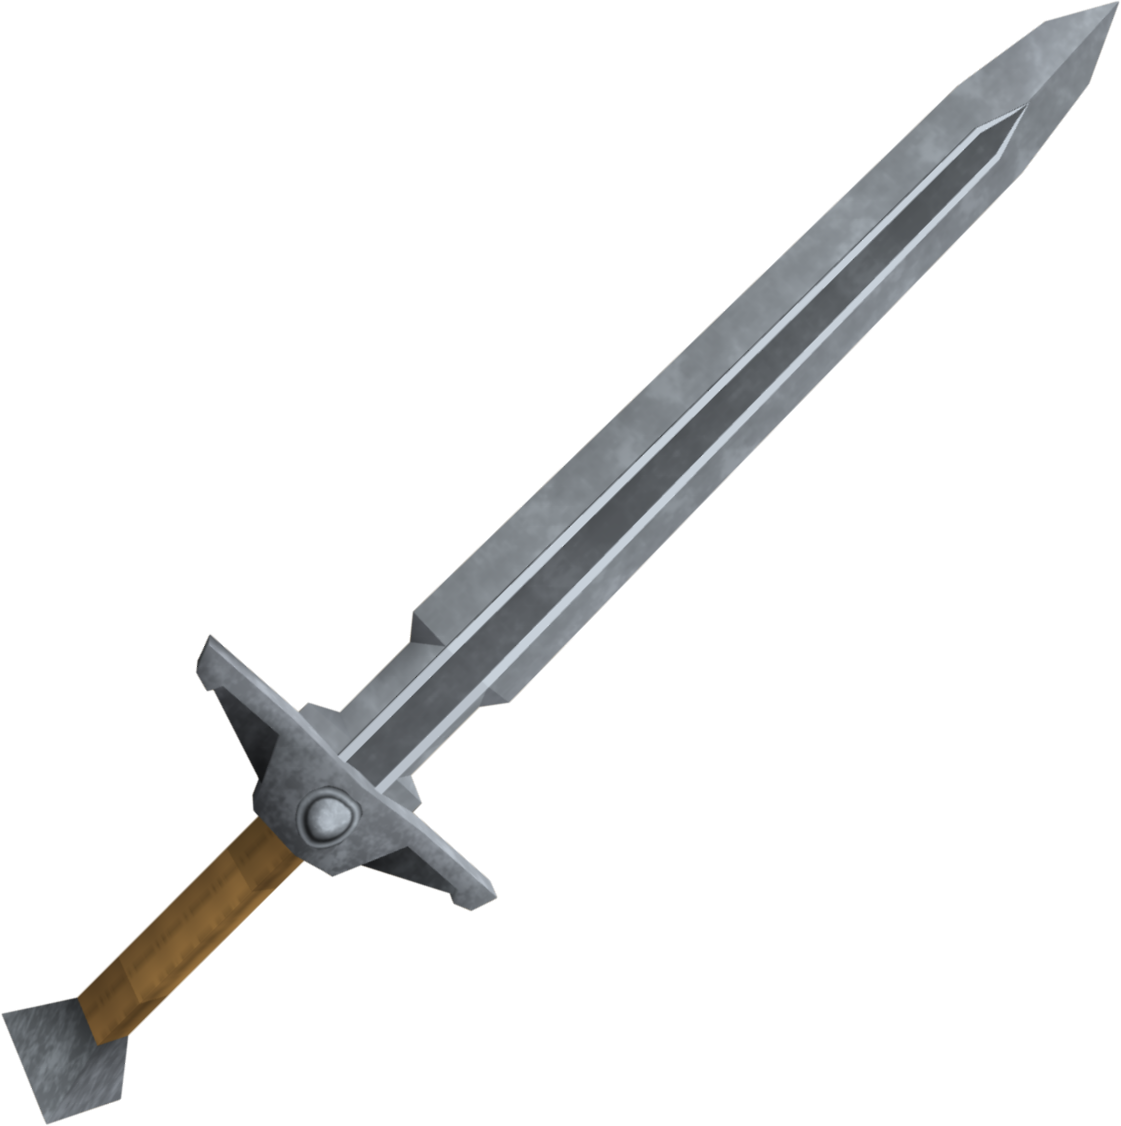 Steel Sword Weapon PNG Image